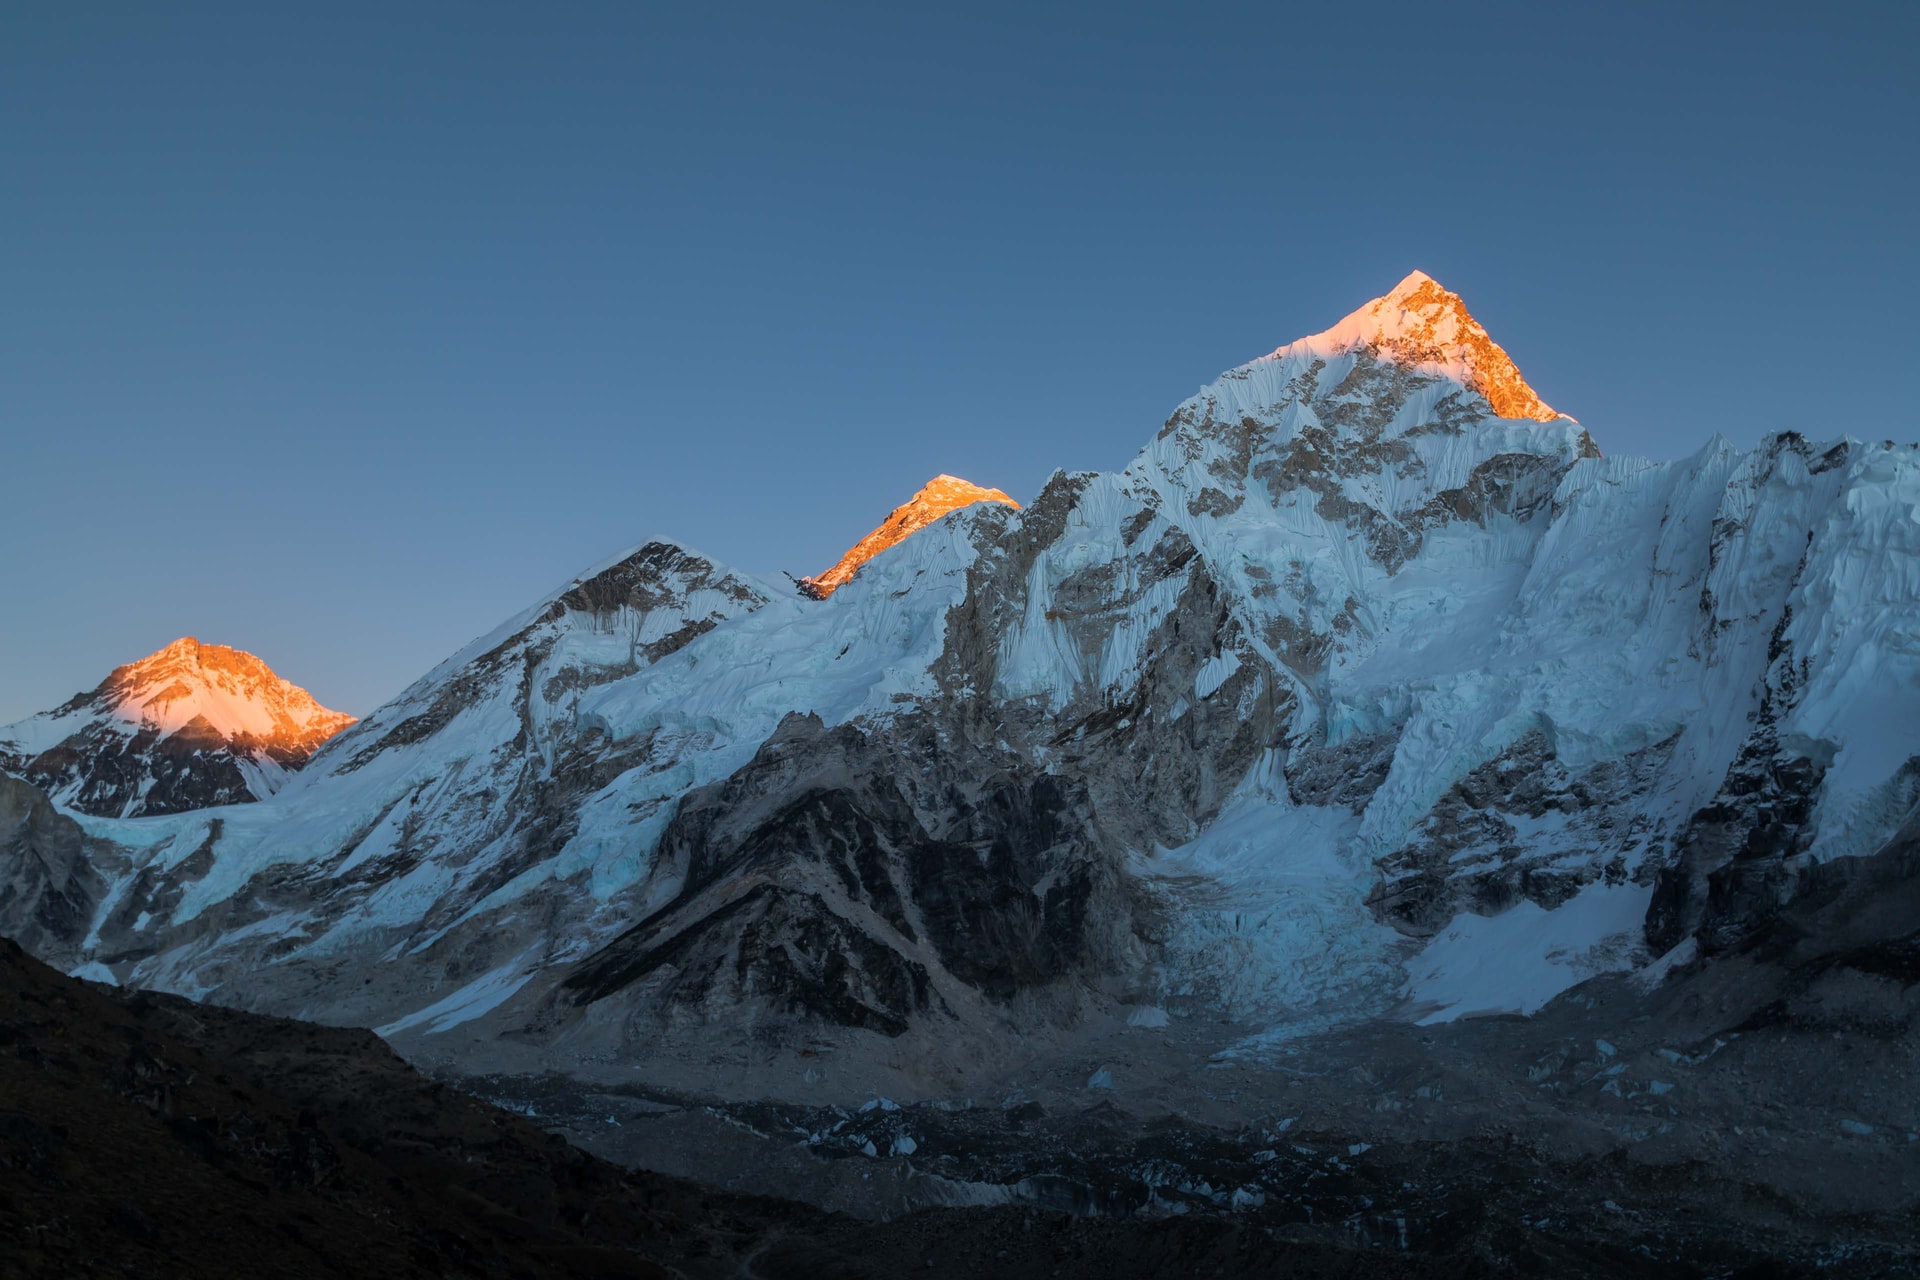 International Mount Everest Day